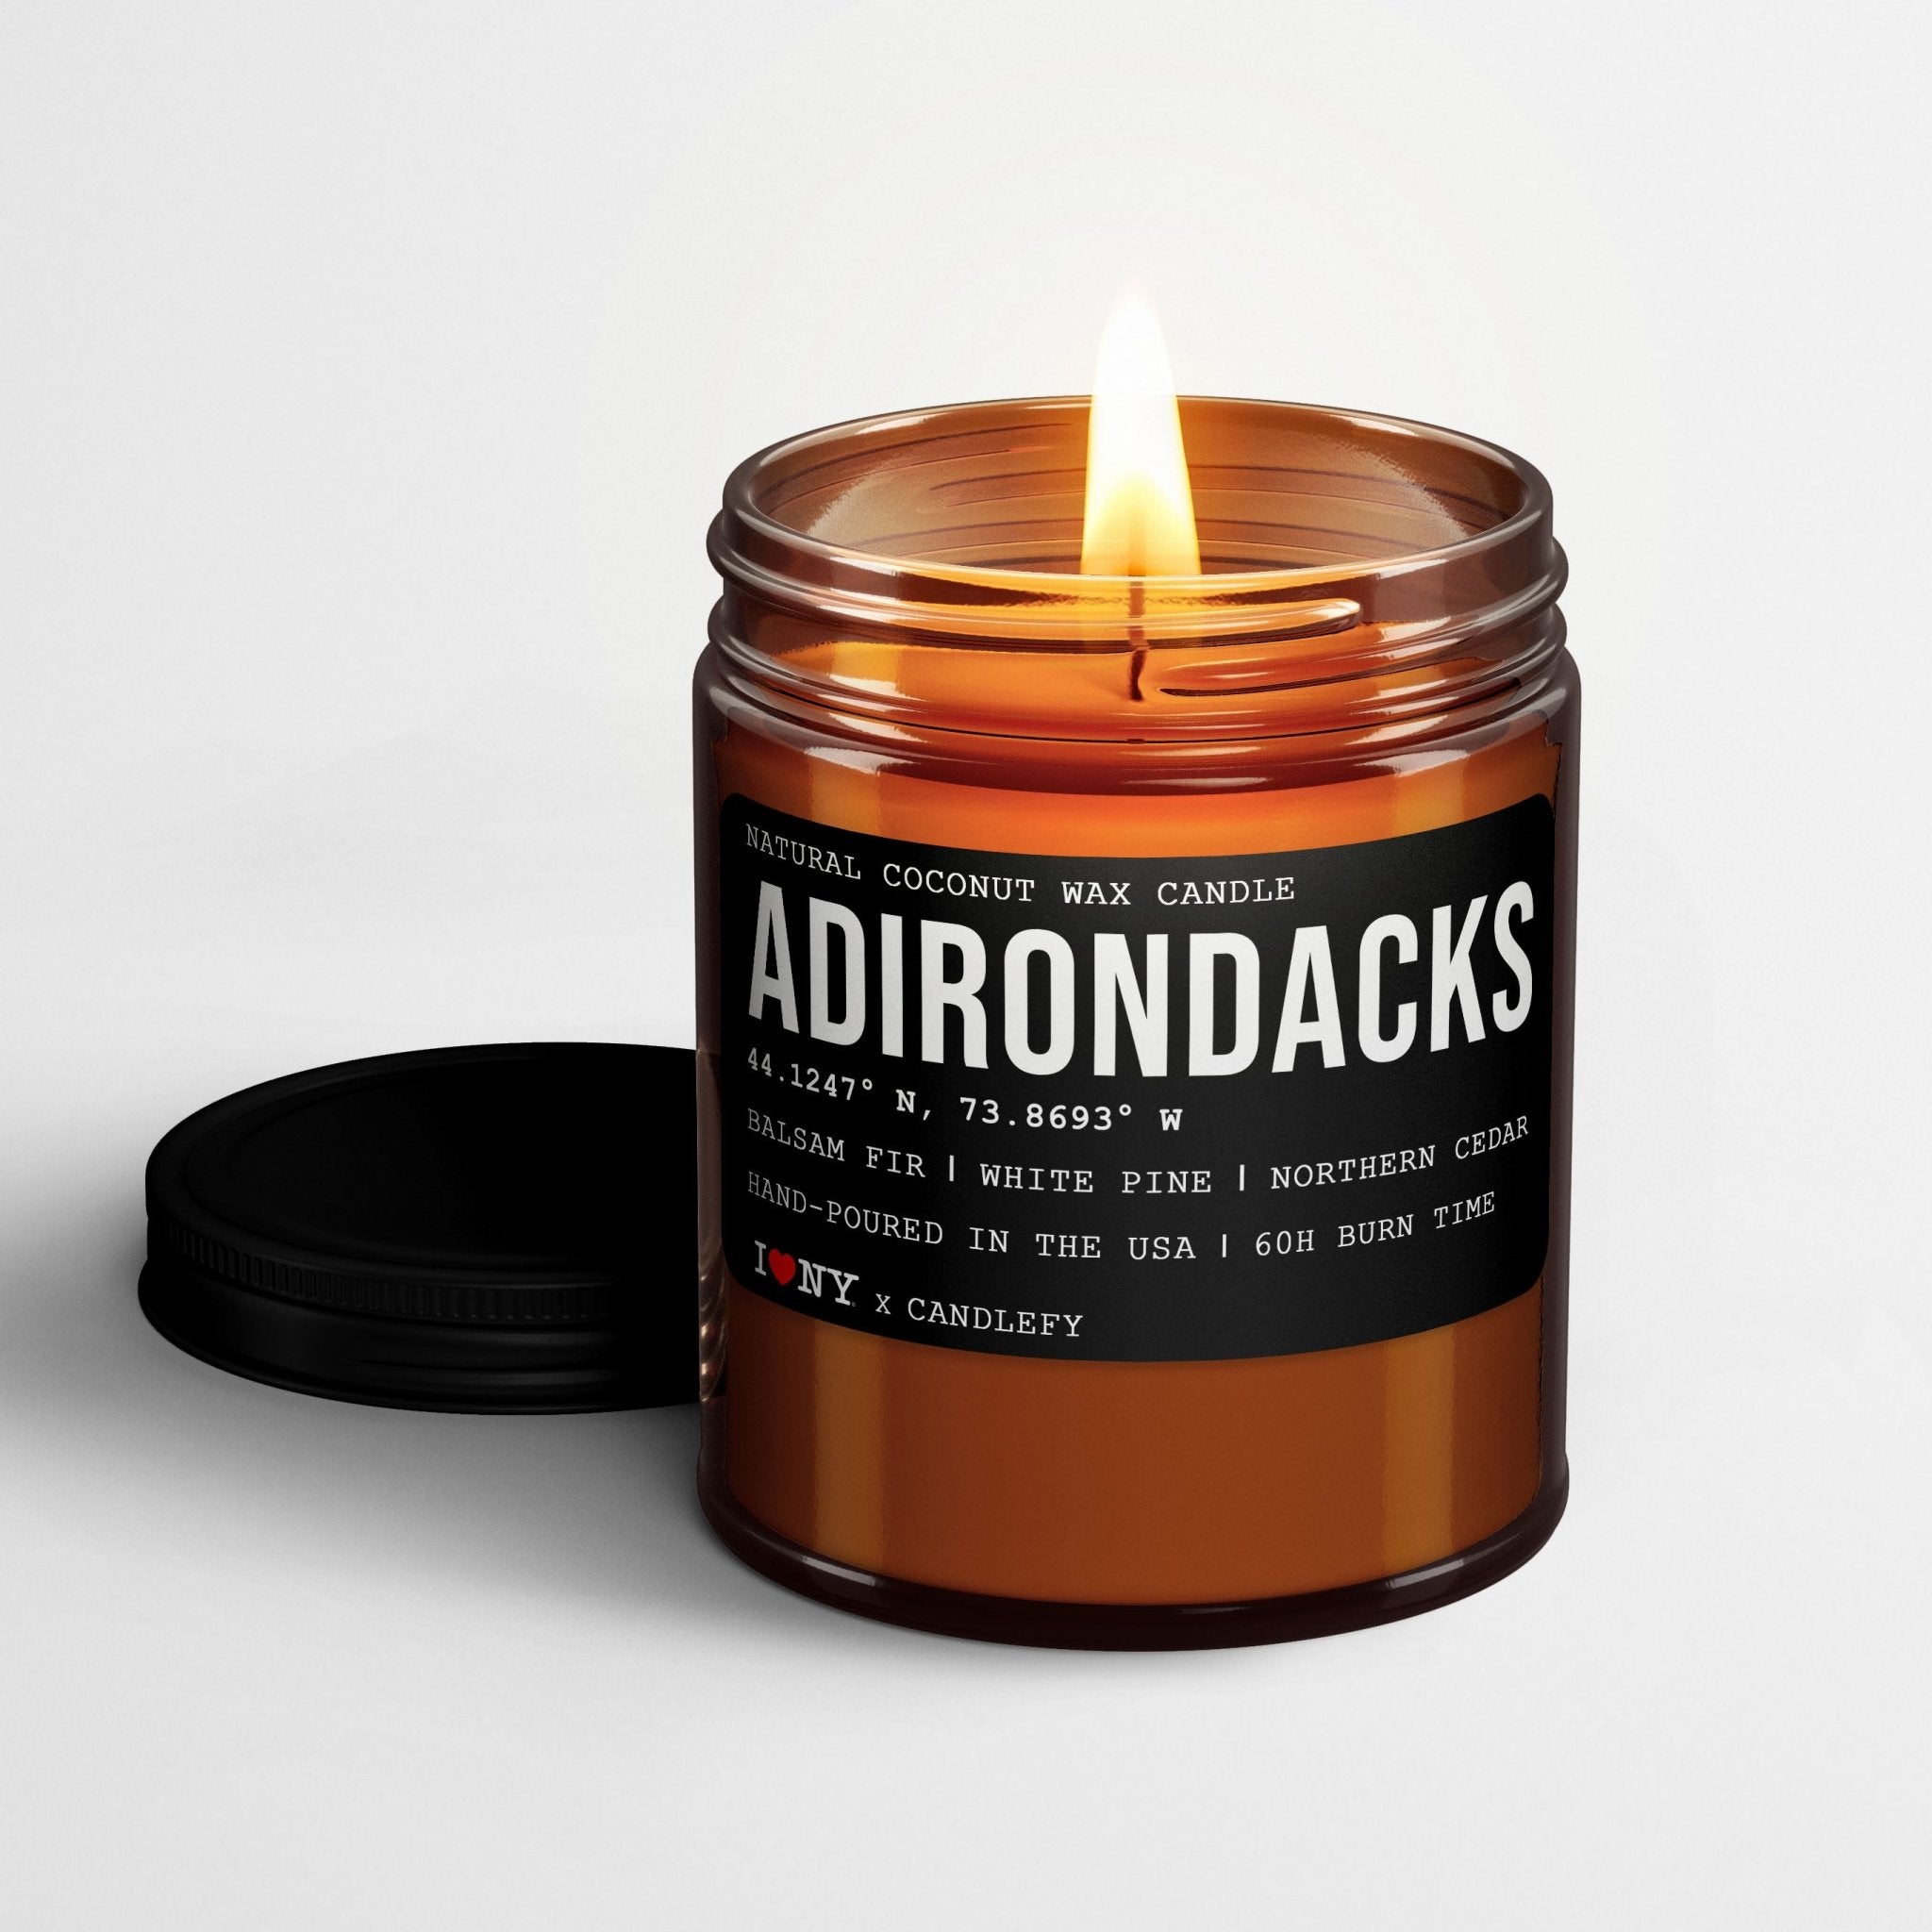 Adirondacks: New York Scented Candle (Balsam Fir, White Pine, Northern Cedar) - Candlefy